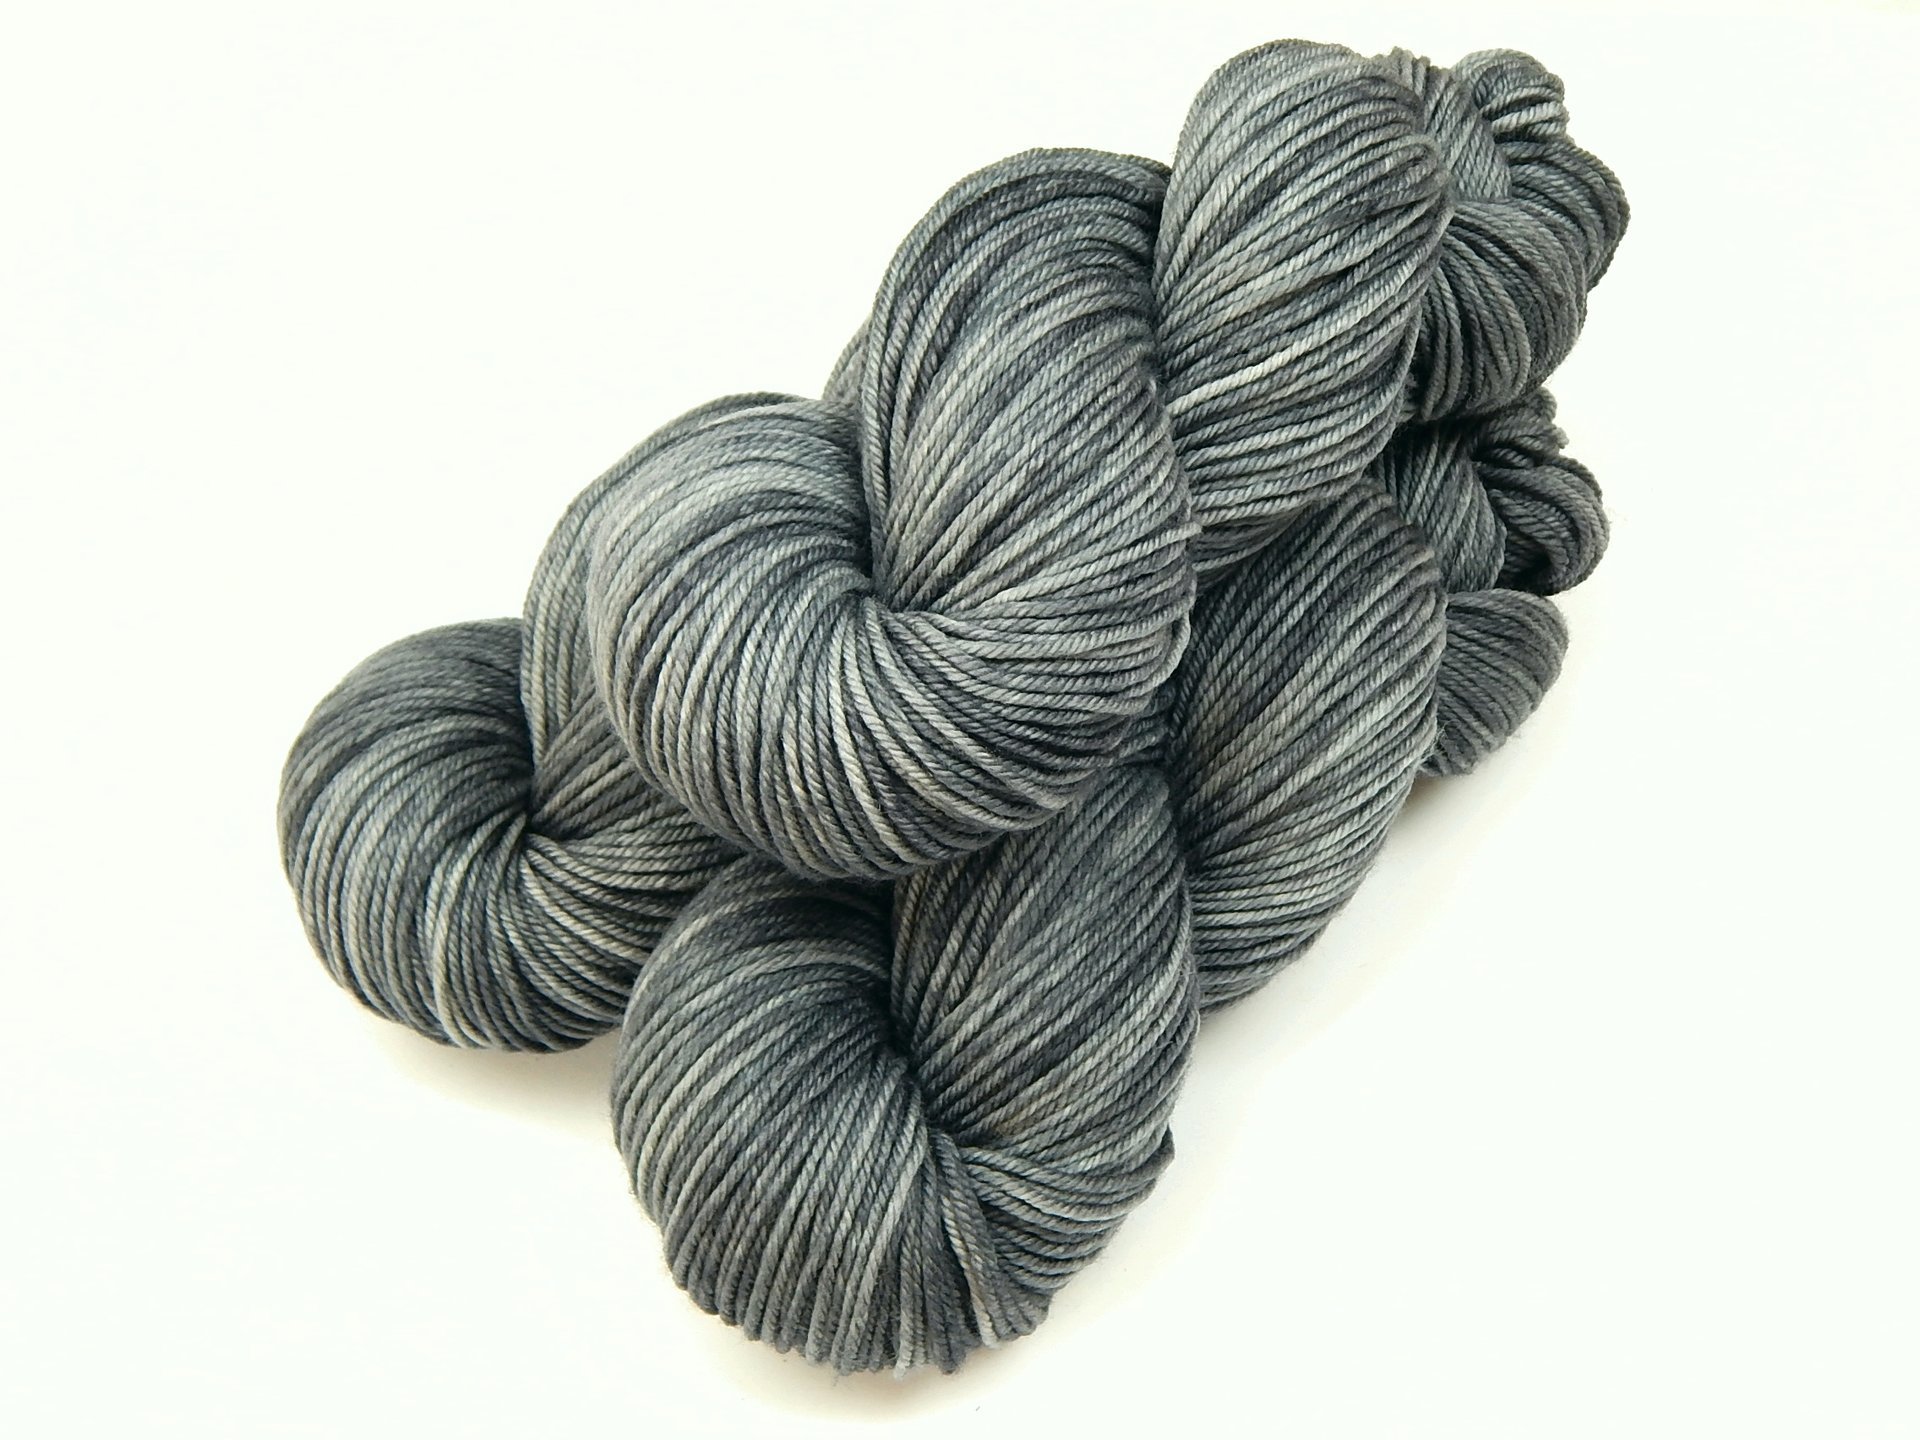 Hand Dyed Yarn, DK Weight Superwash Merino Wool - Pewter - Soft Washable Tonal Grey Indie Dyed Yarn, Gray Wool Yarn for Knitting Crochet